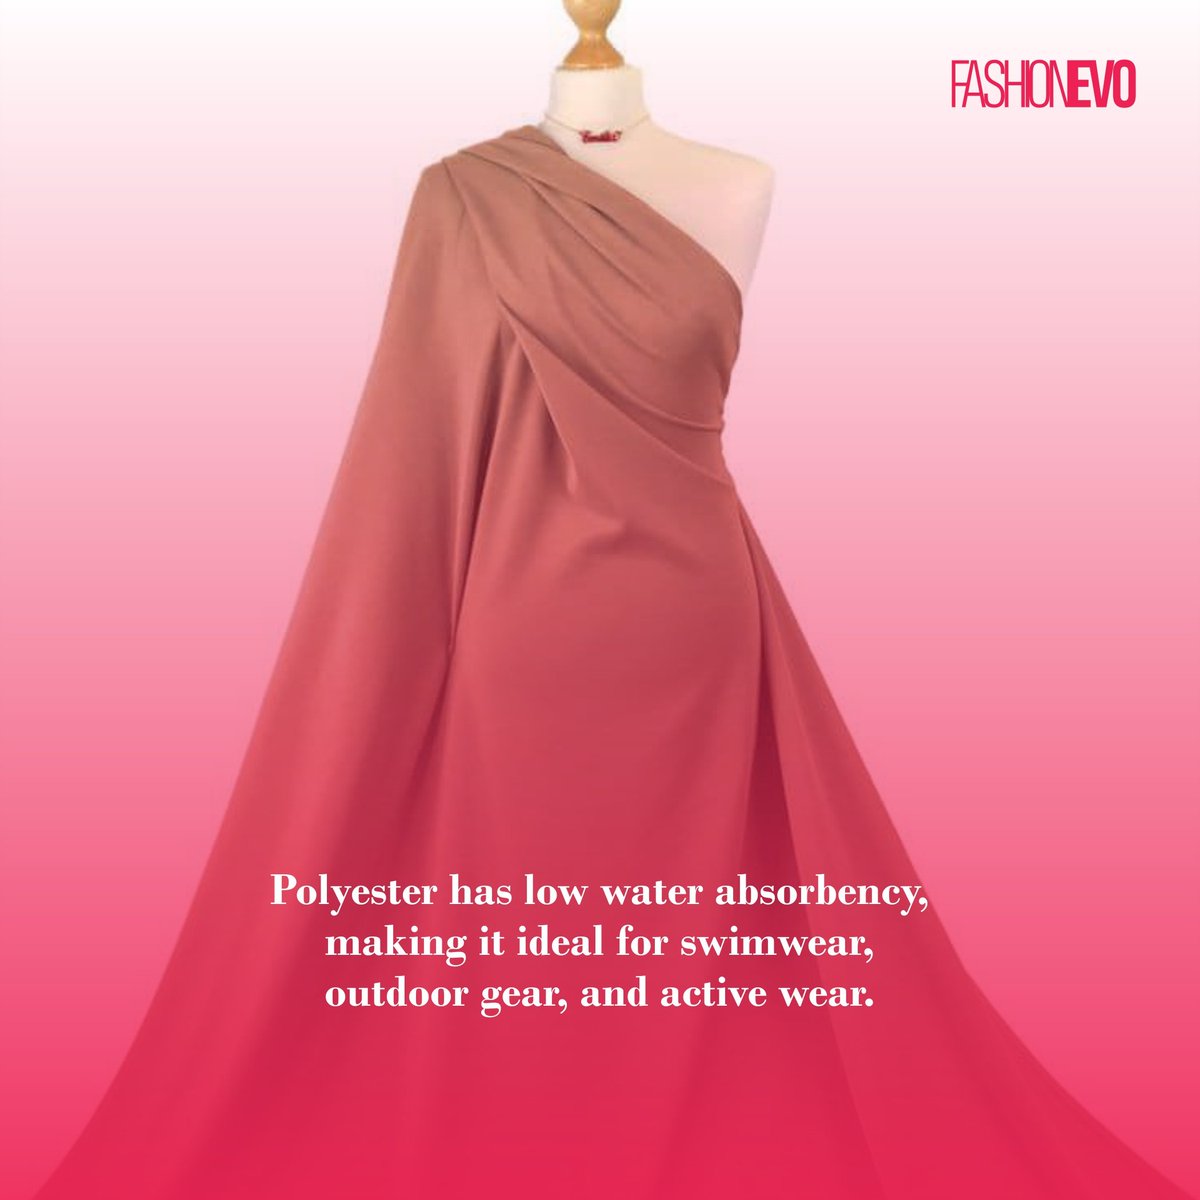 #FabricFacts #Polyester #FashionFabrics #ClothingMaterials #TextileTips #KnowYourClothes #WardrobeKnowledge #SyntheticFabric #FashionEducation #Fashionevo #Fashionevostyle